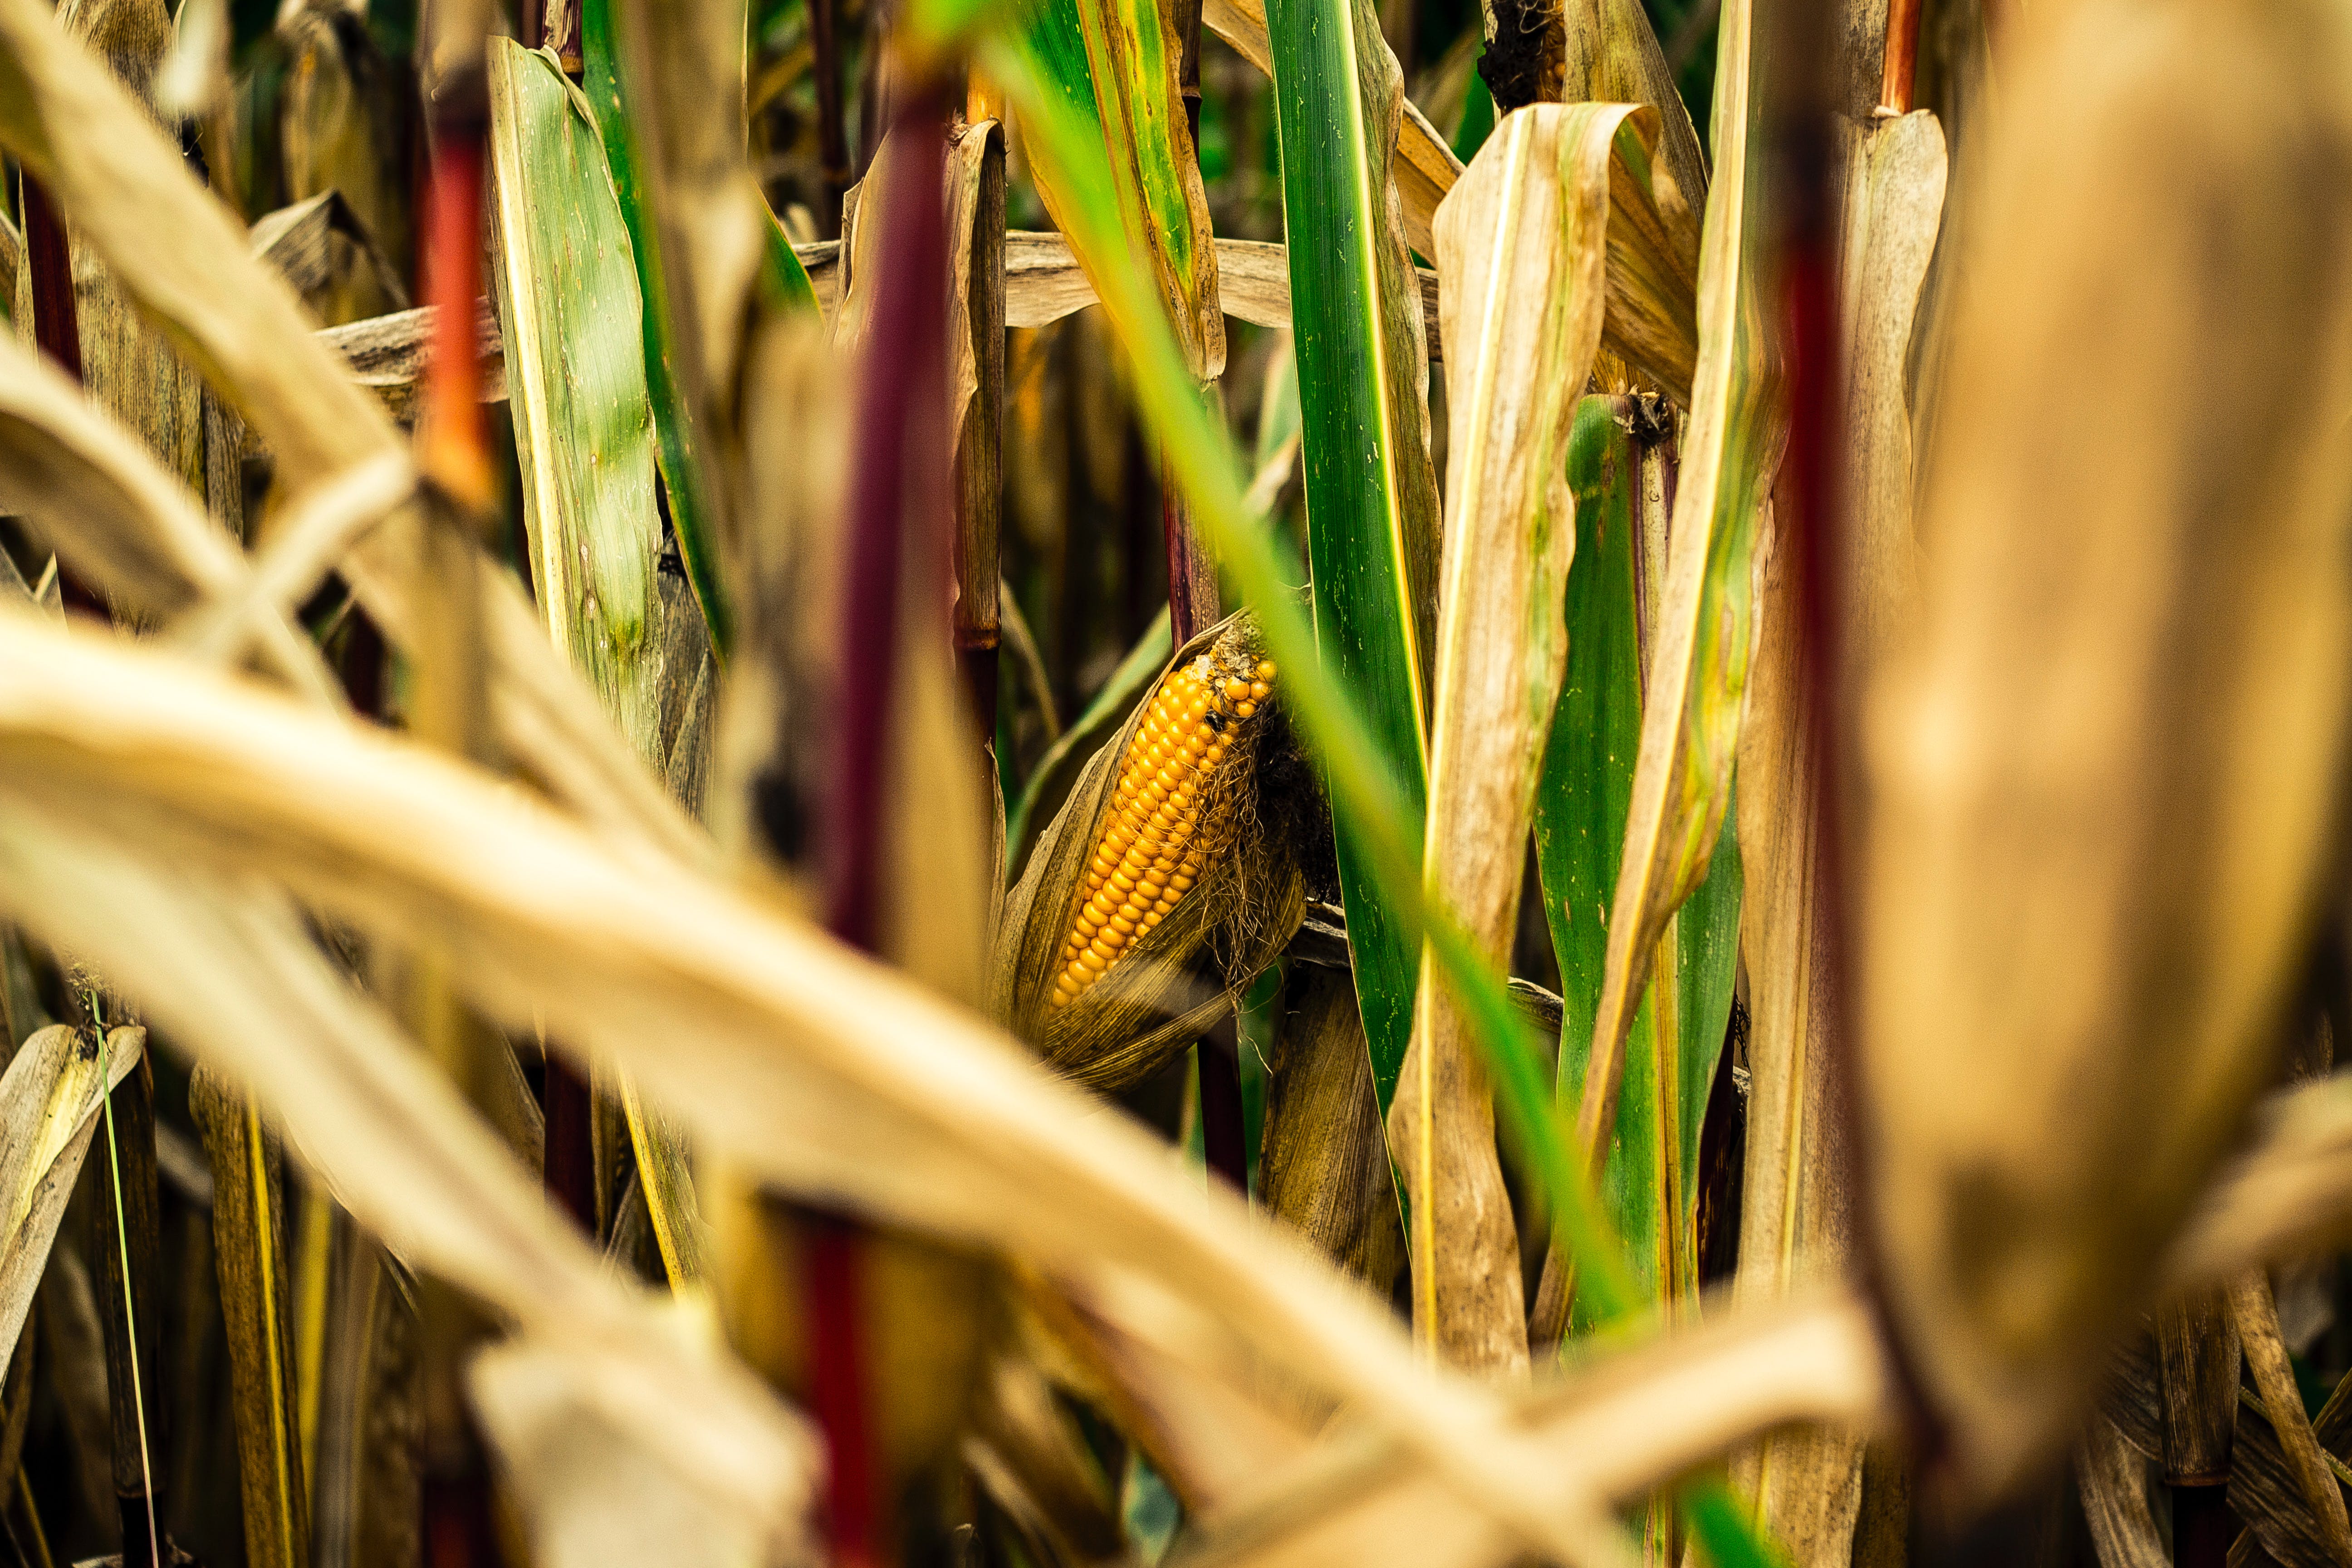 Corn | Source: Pexels